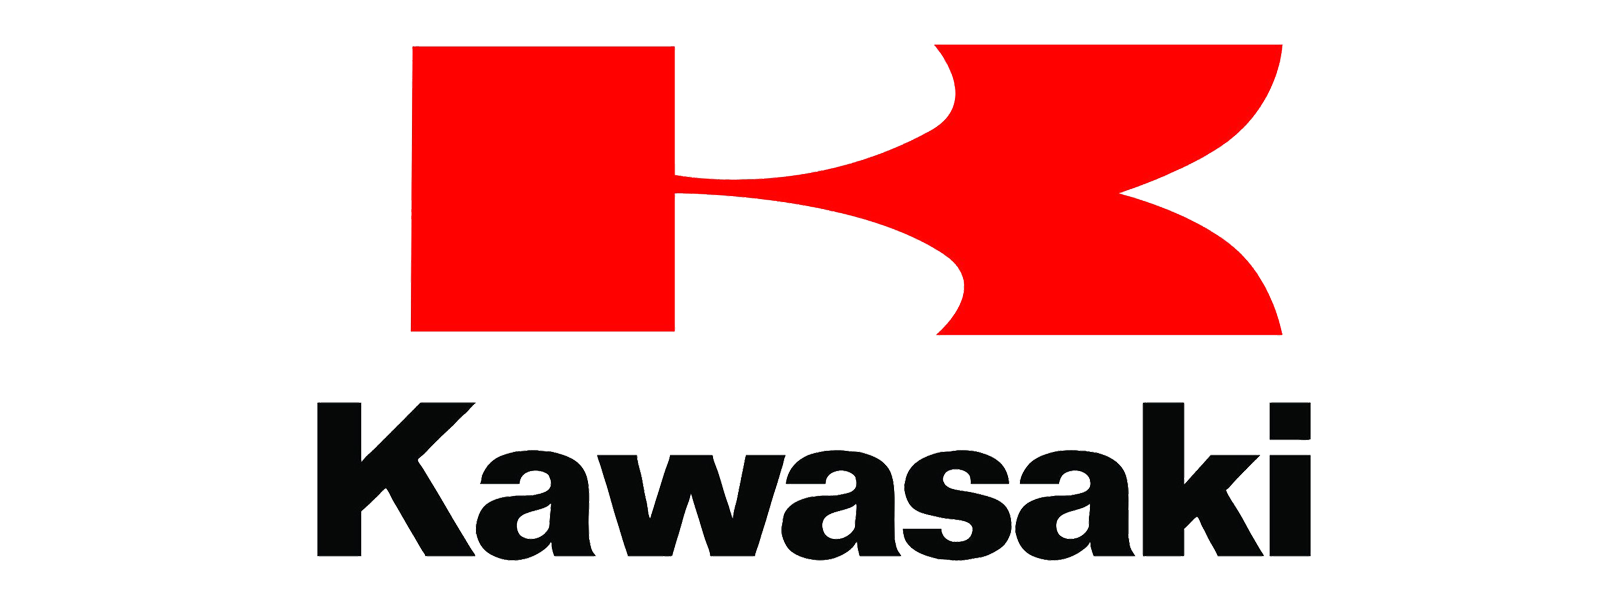 Download Kawasaki Ninja Logo 